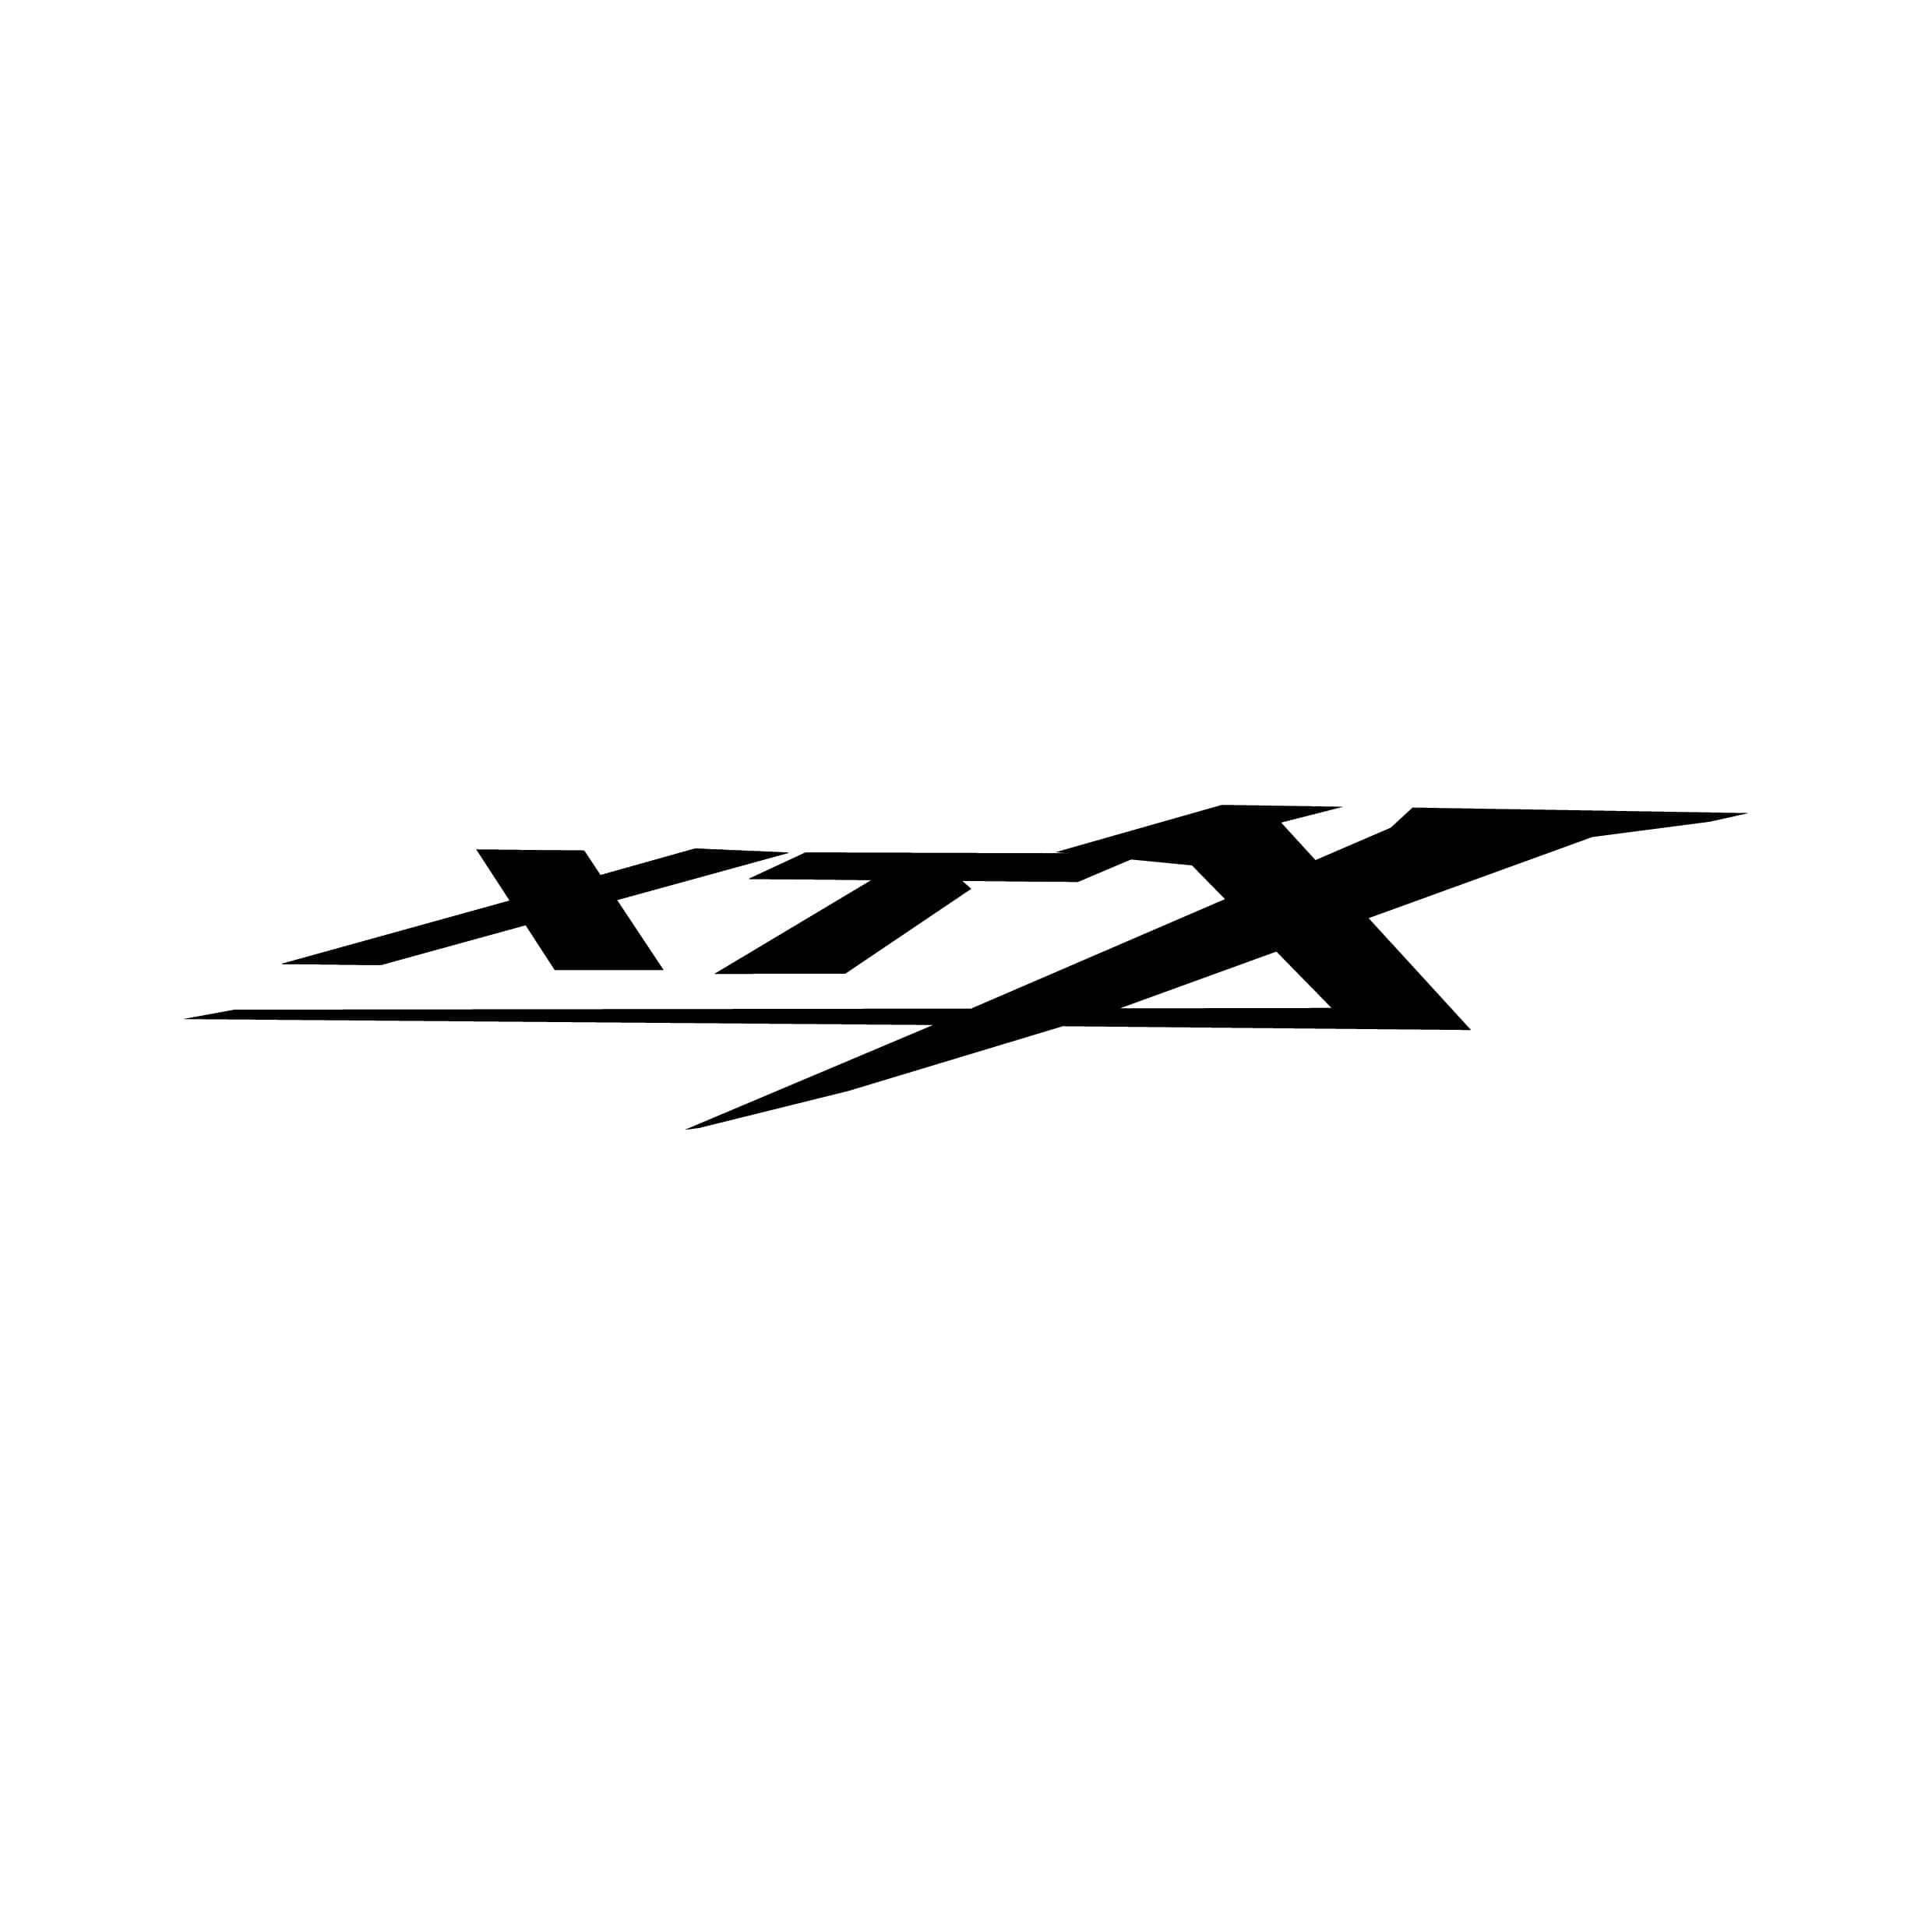 stickers-xtx-yamaha-ref83-autocollant-moto-sticker-deux-roue-autocollants-decals-sponsors-tuning-sport-logo-bike-scooter-min